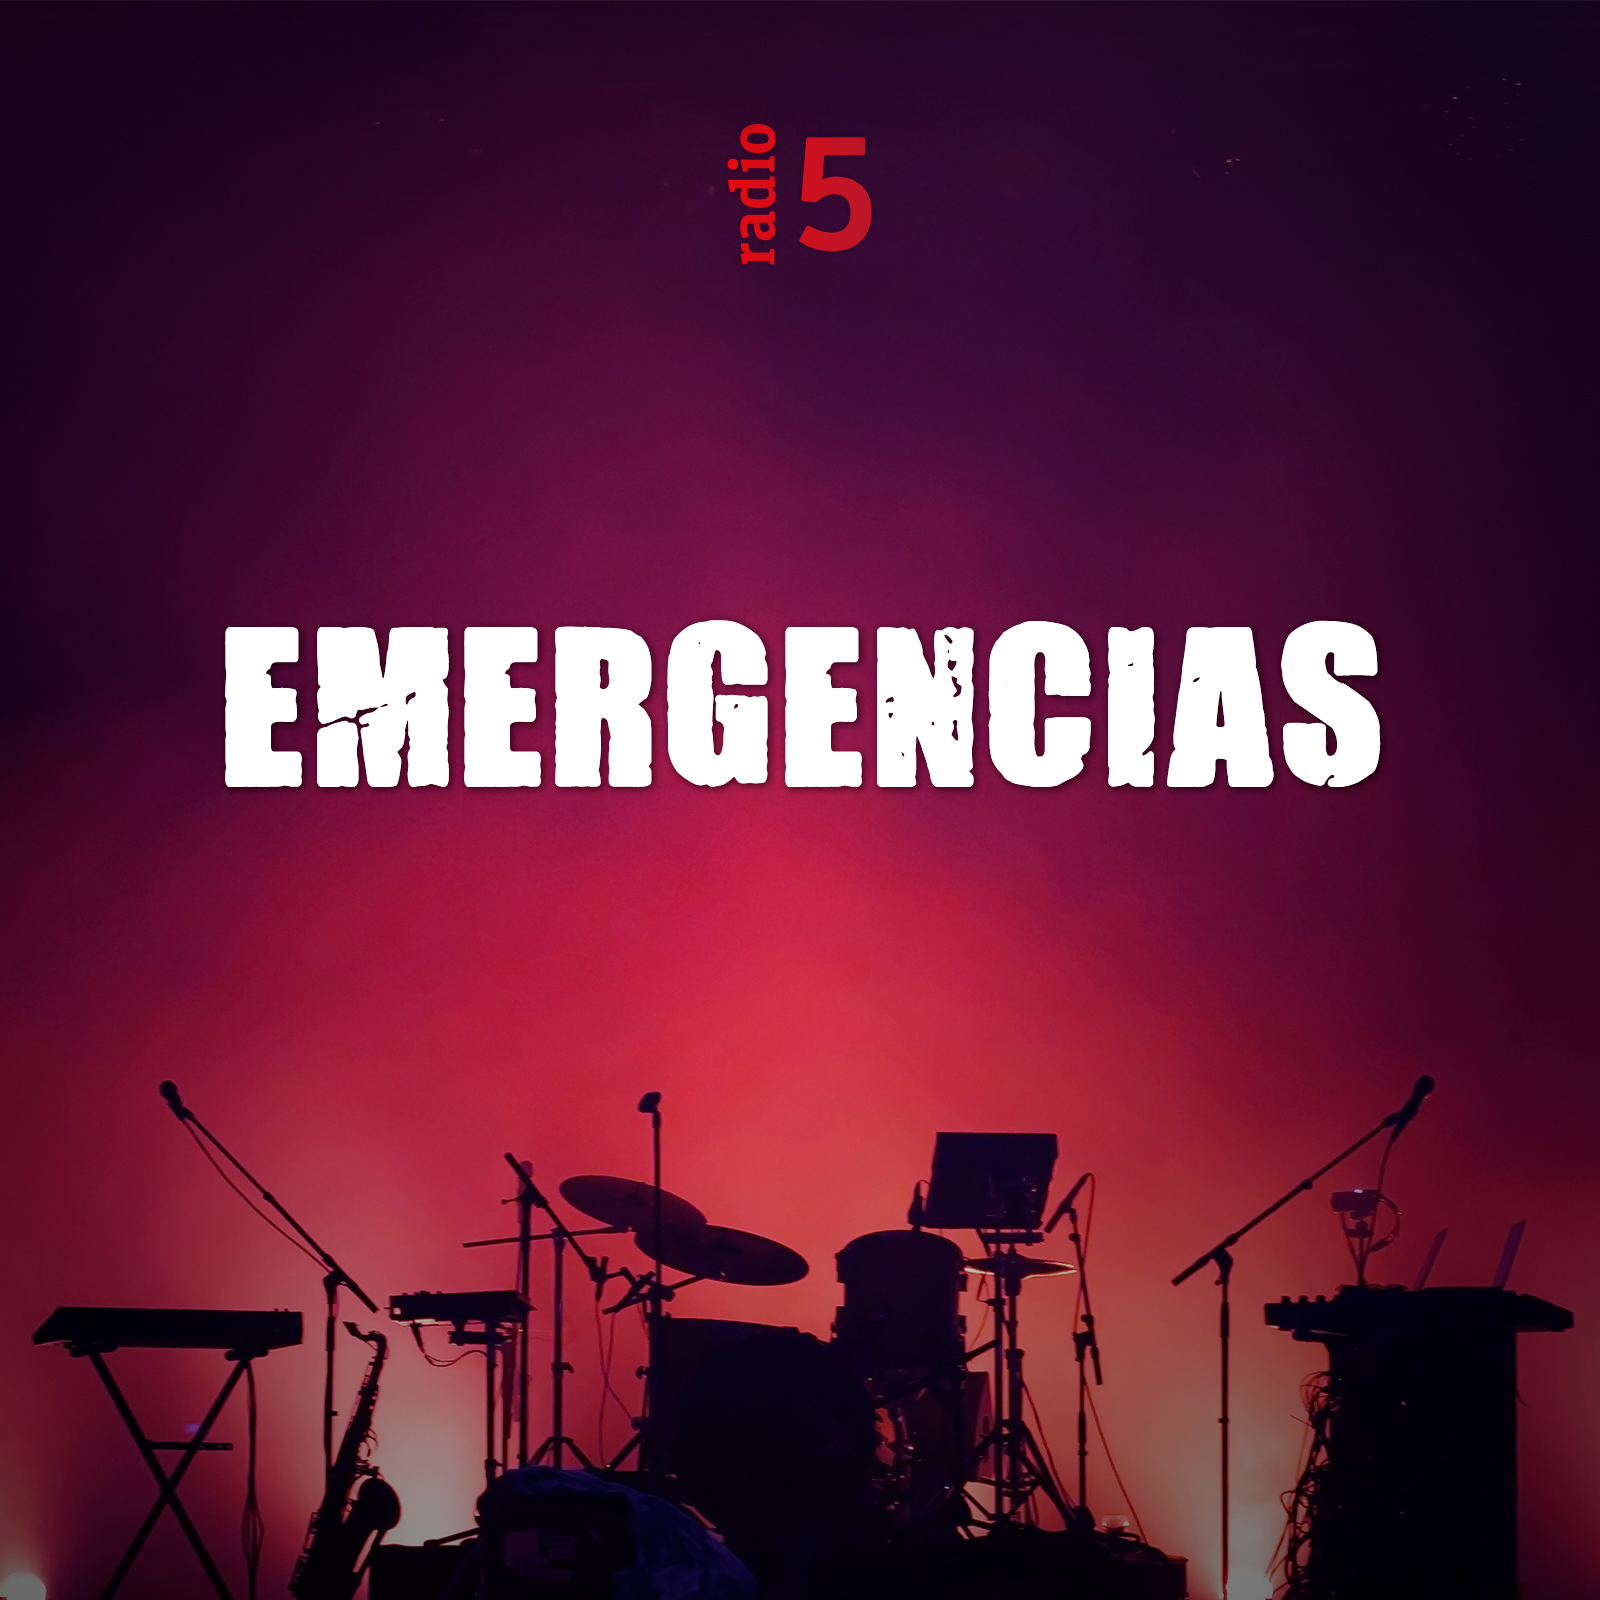 Emergencias